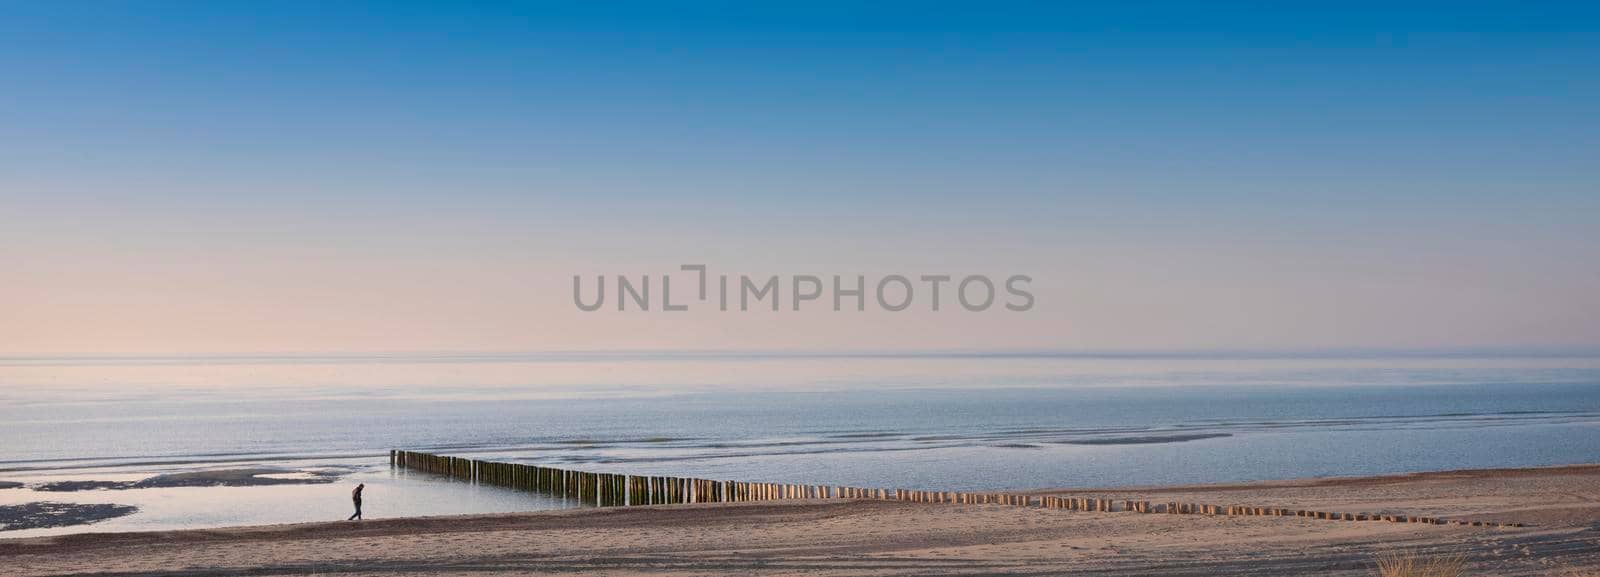 lonely figure strolls along beach of north sea in dutch province of Zeeland under blue sky in spring by ahavelaar